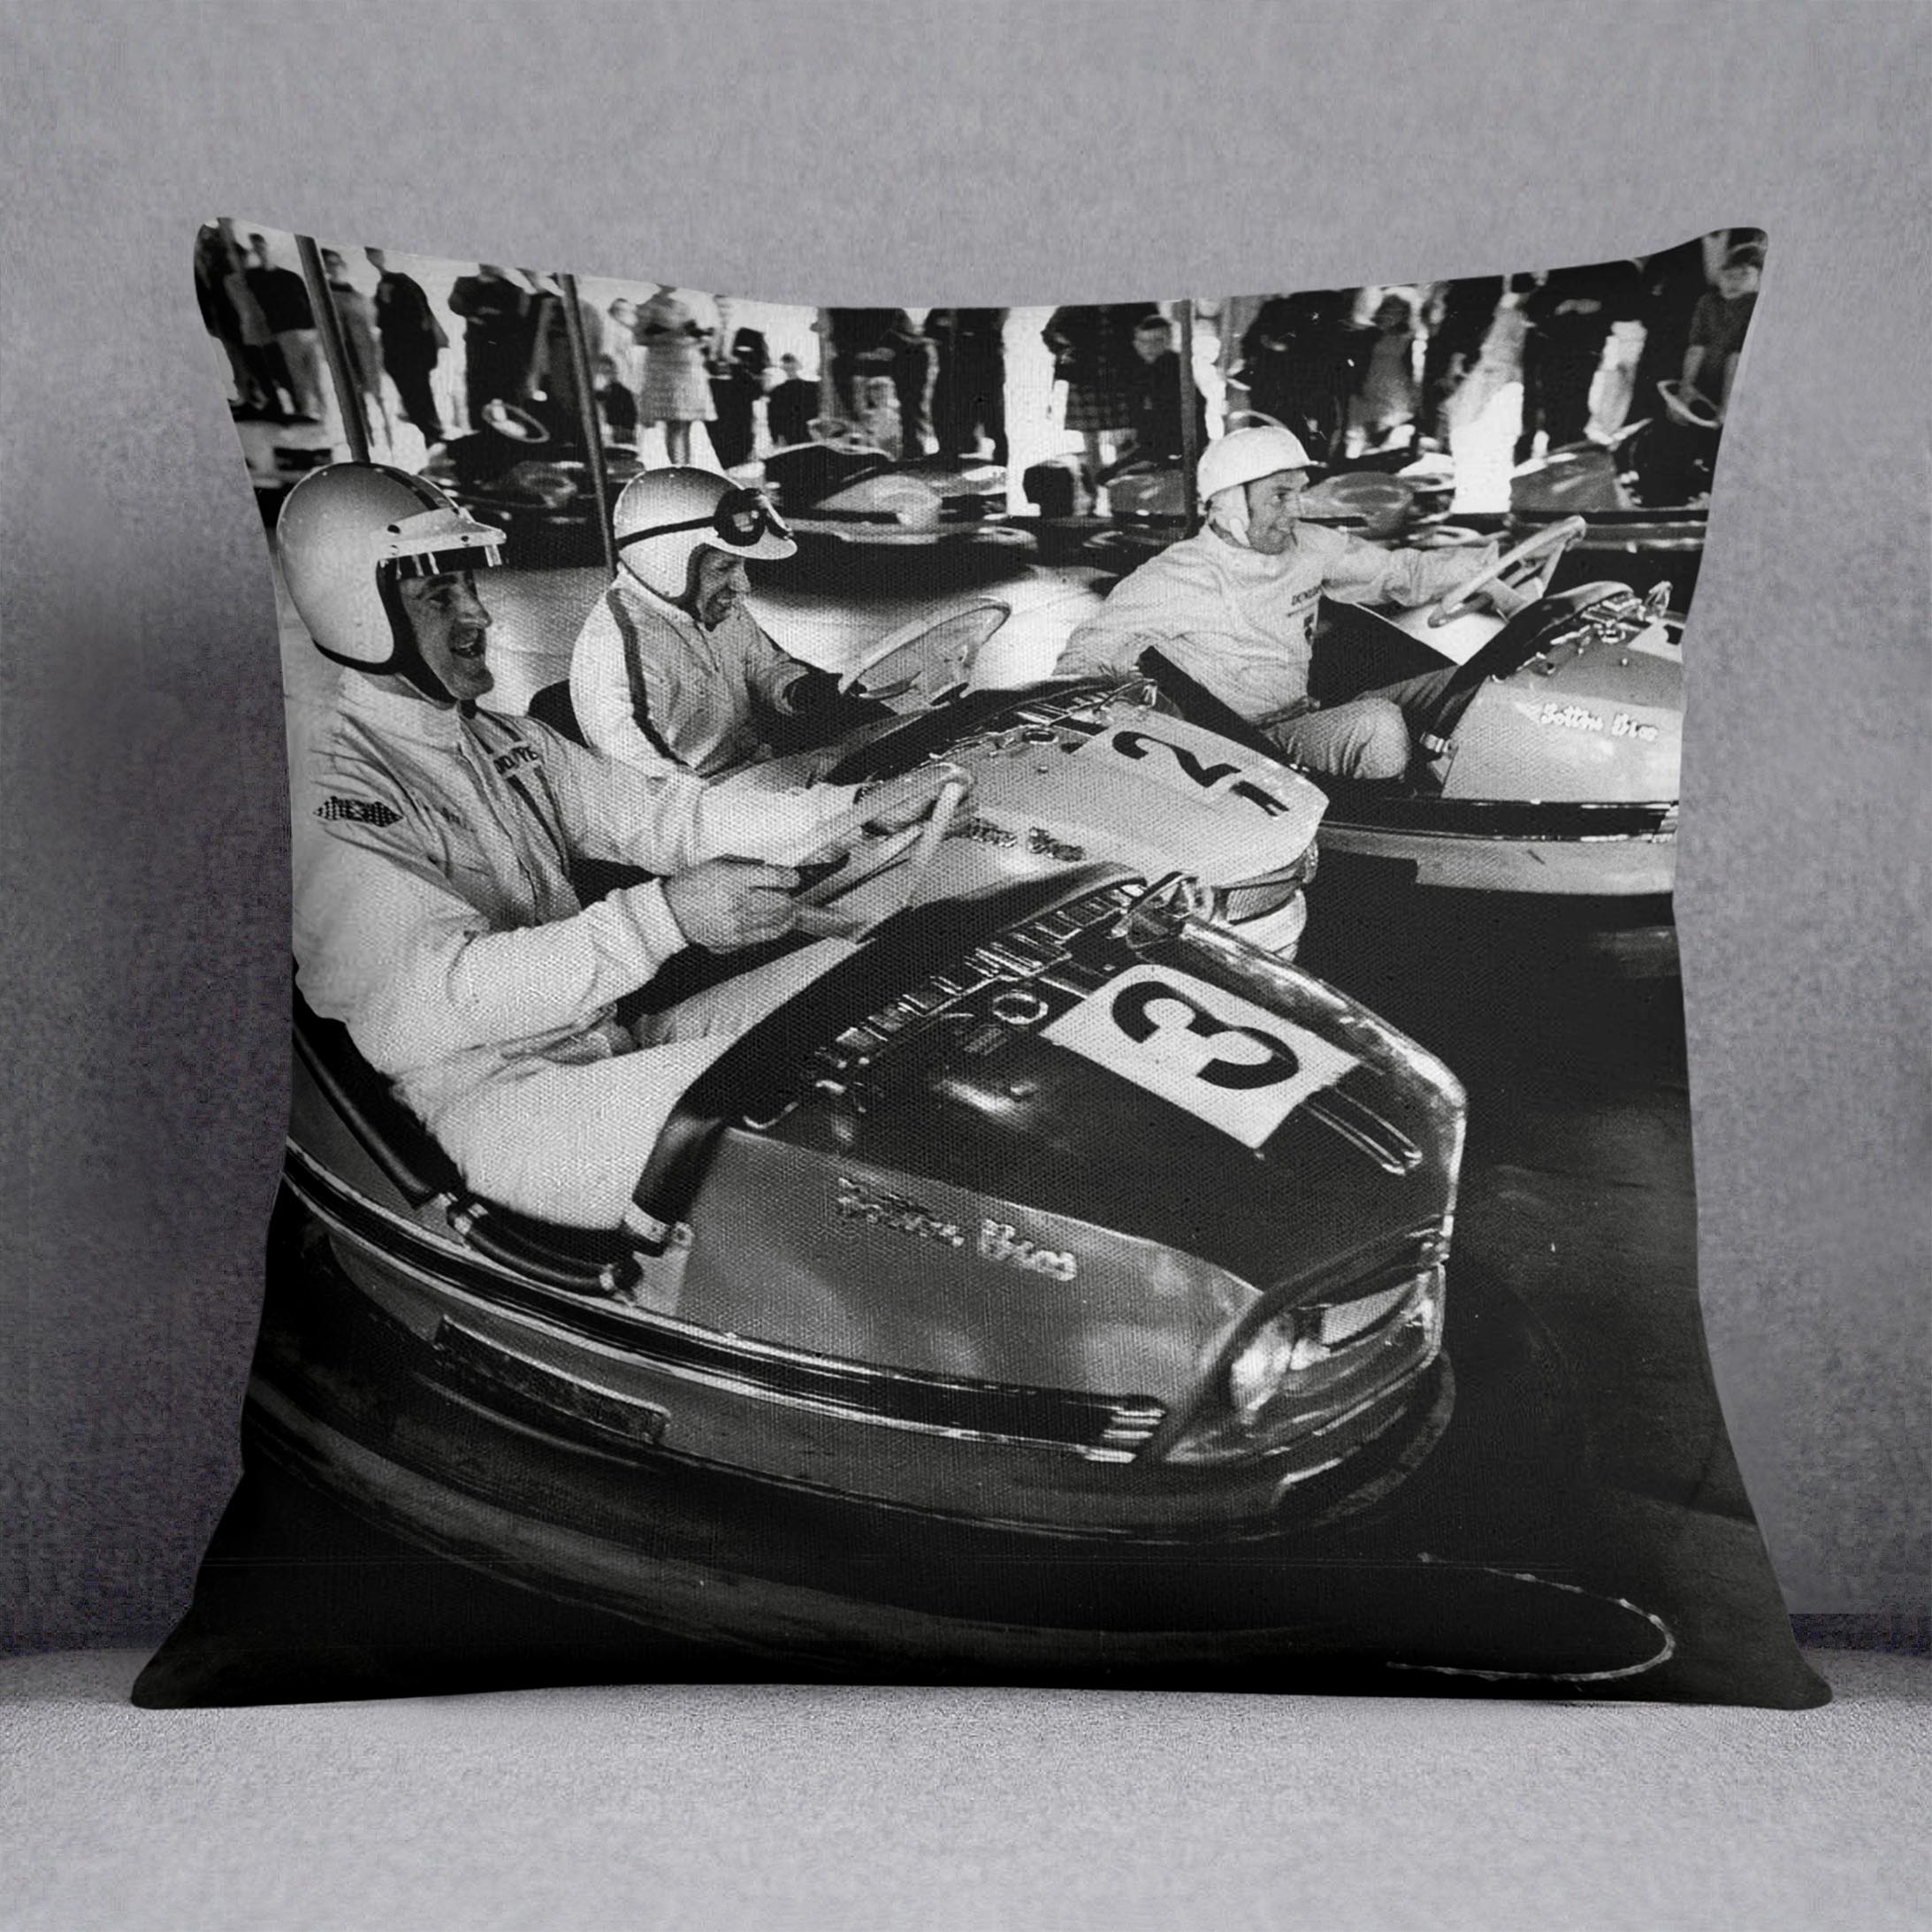 Racing drivers on the dodgems Cushion